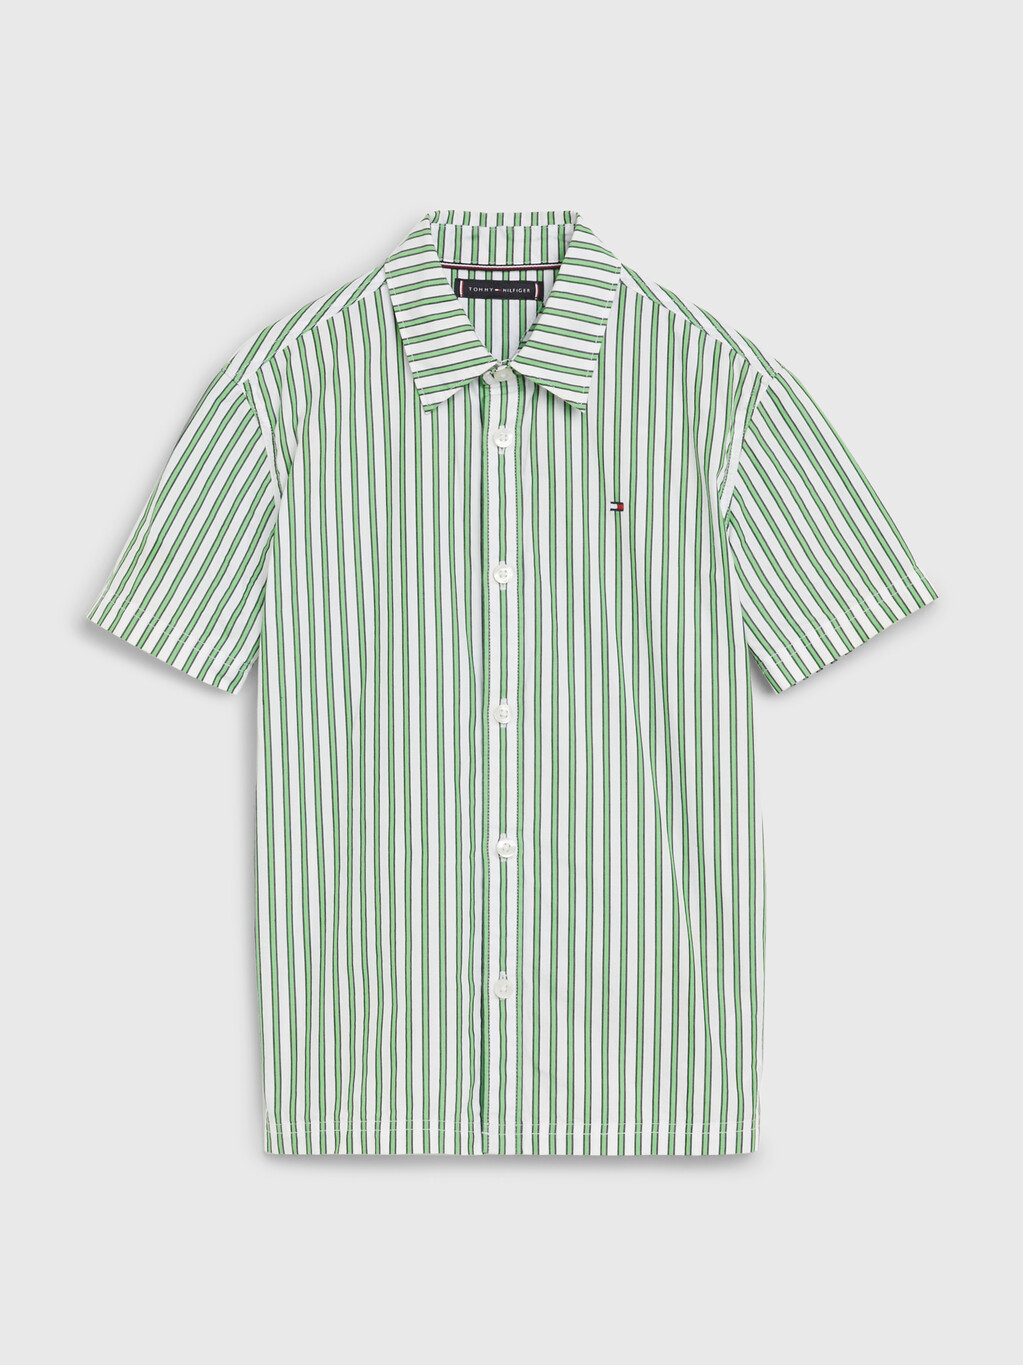 條紋短袖裇衫, Spring Lime Stripe, hi-res